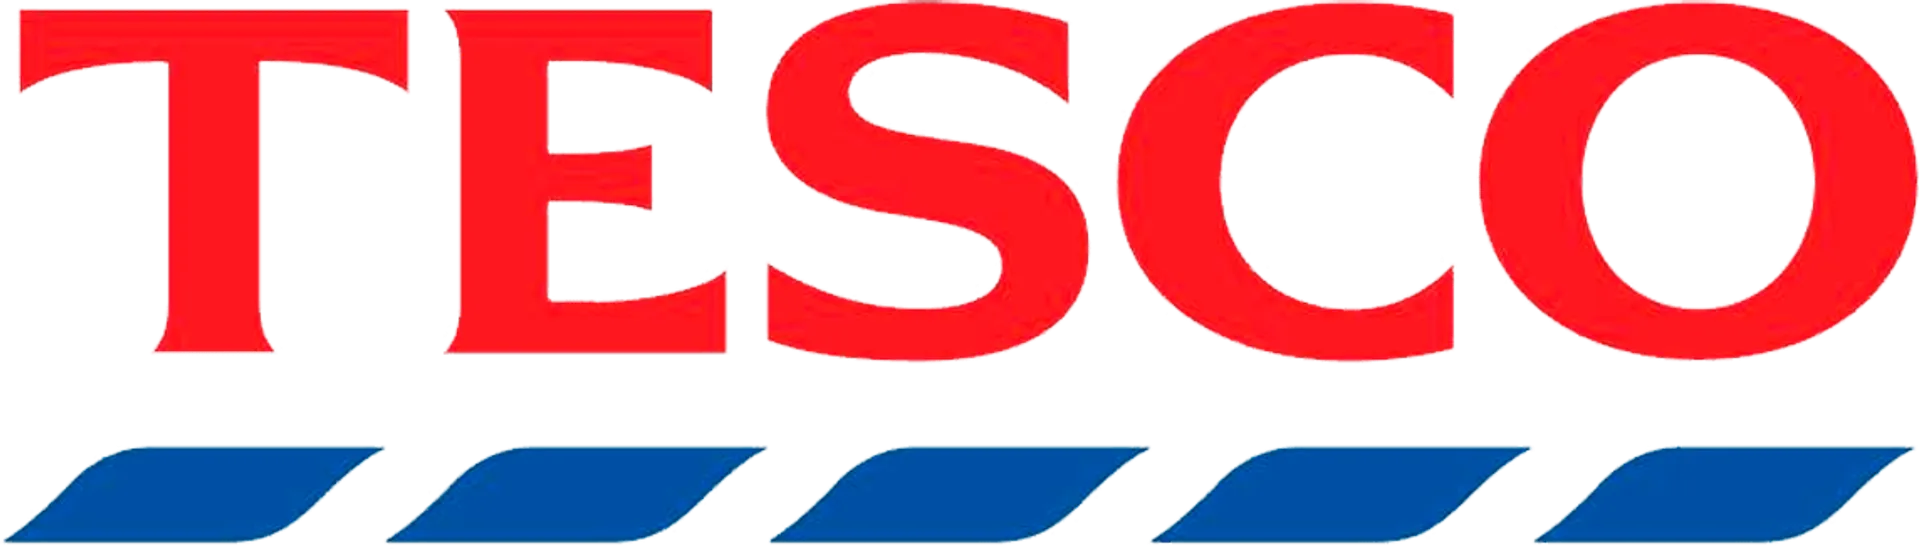 TESCO logo of current catalogue